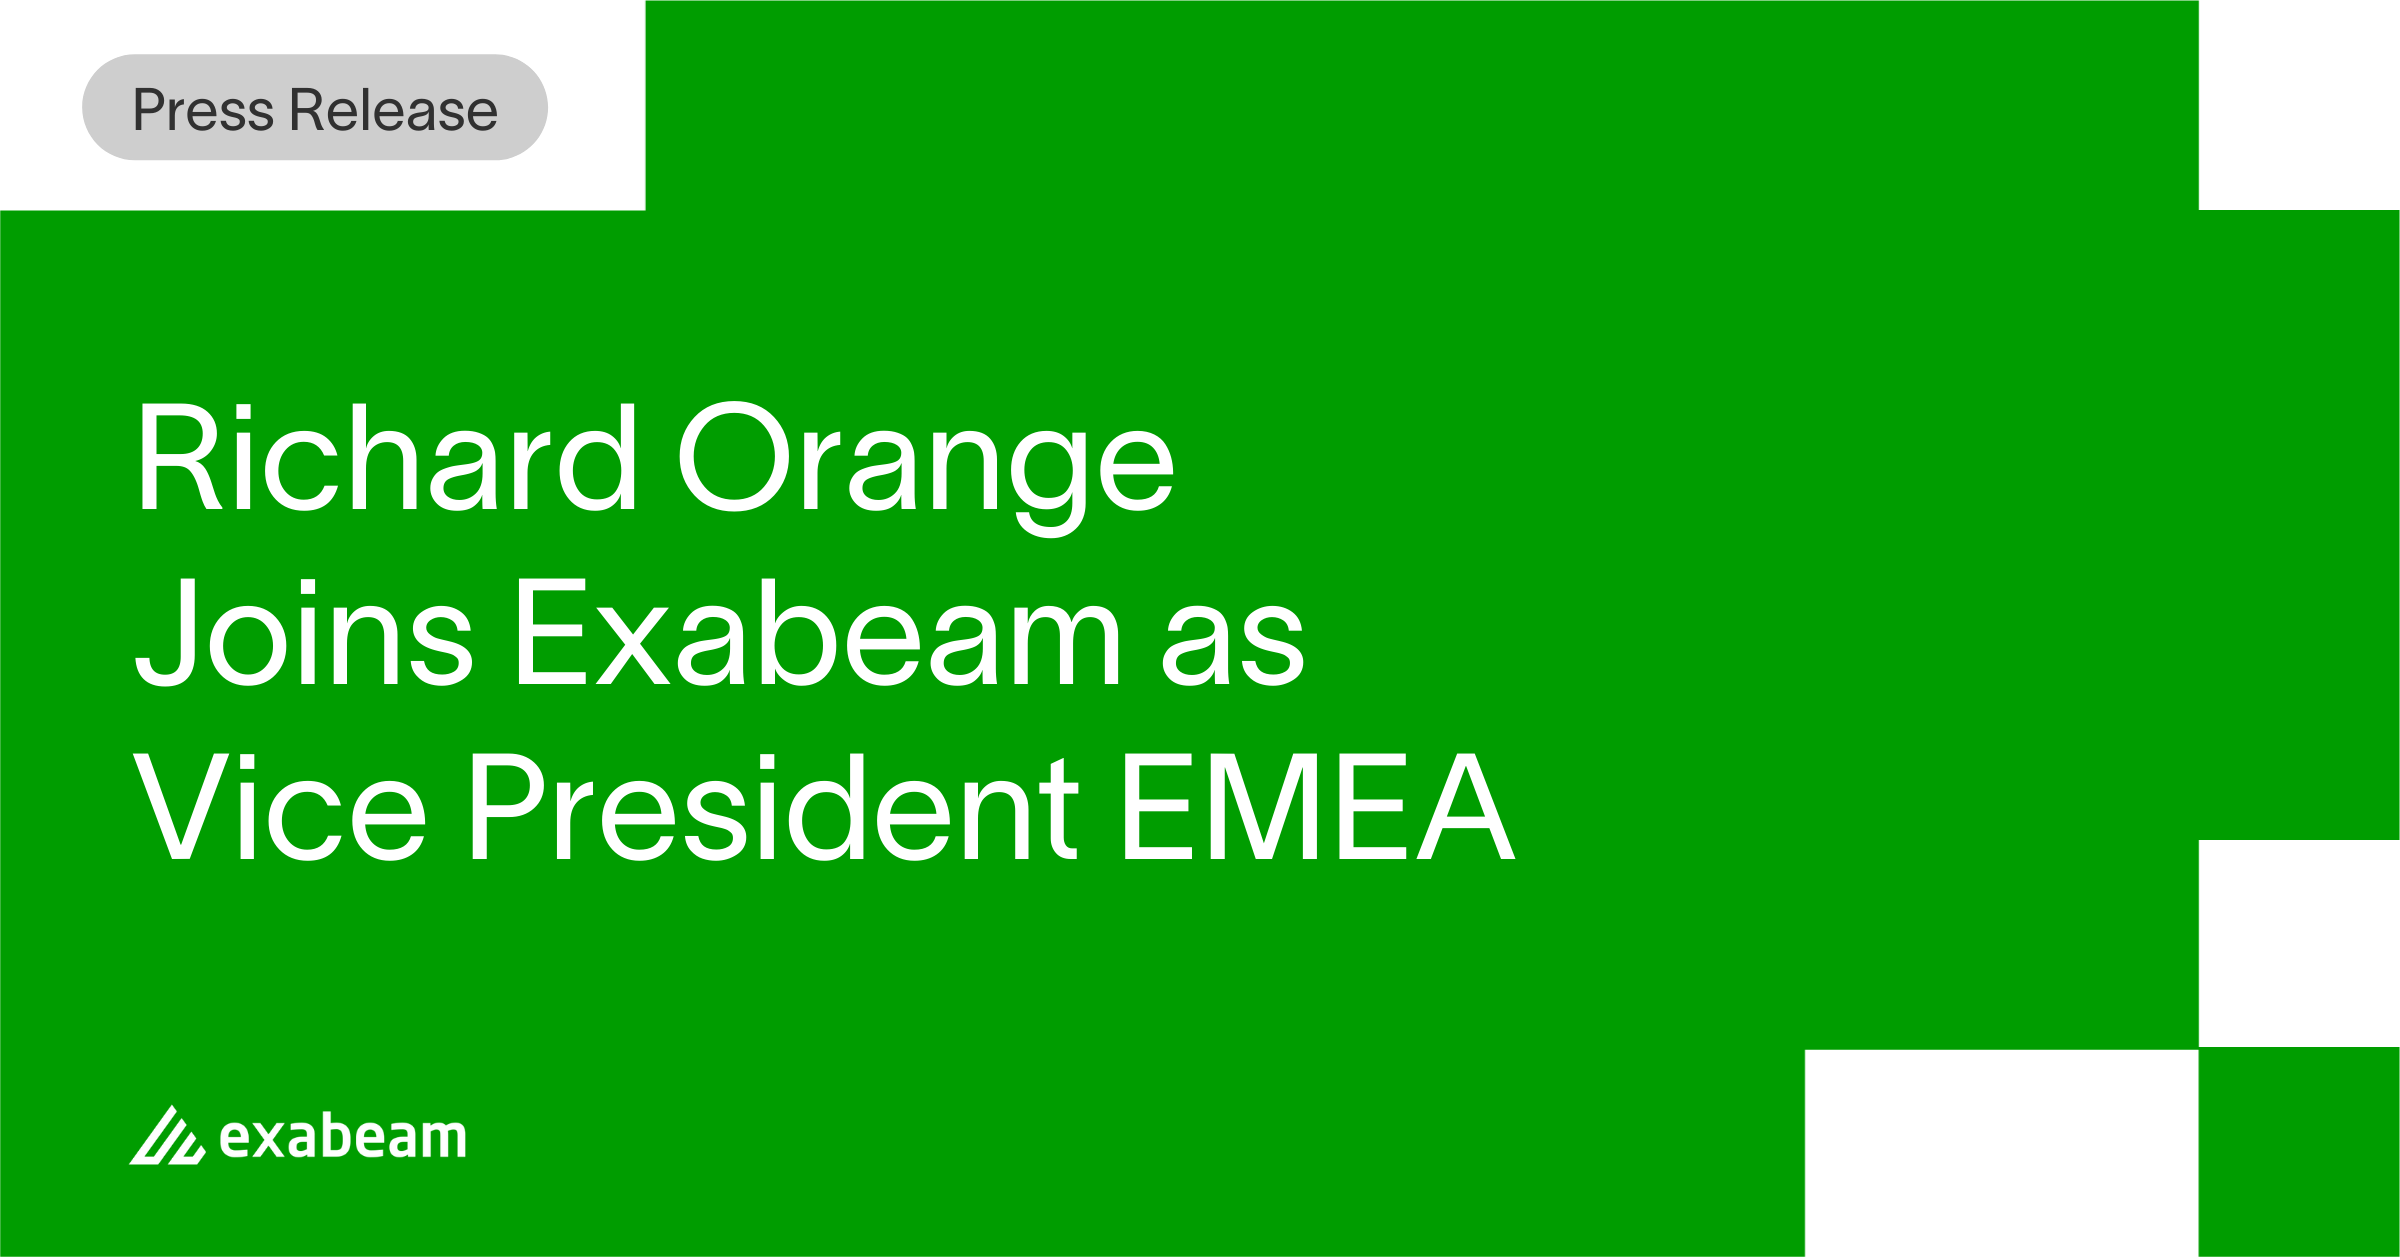 Richard Orange Joins Exabeam as Vice President EMEA